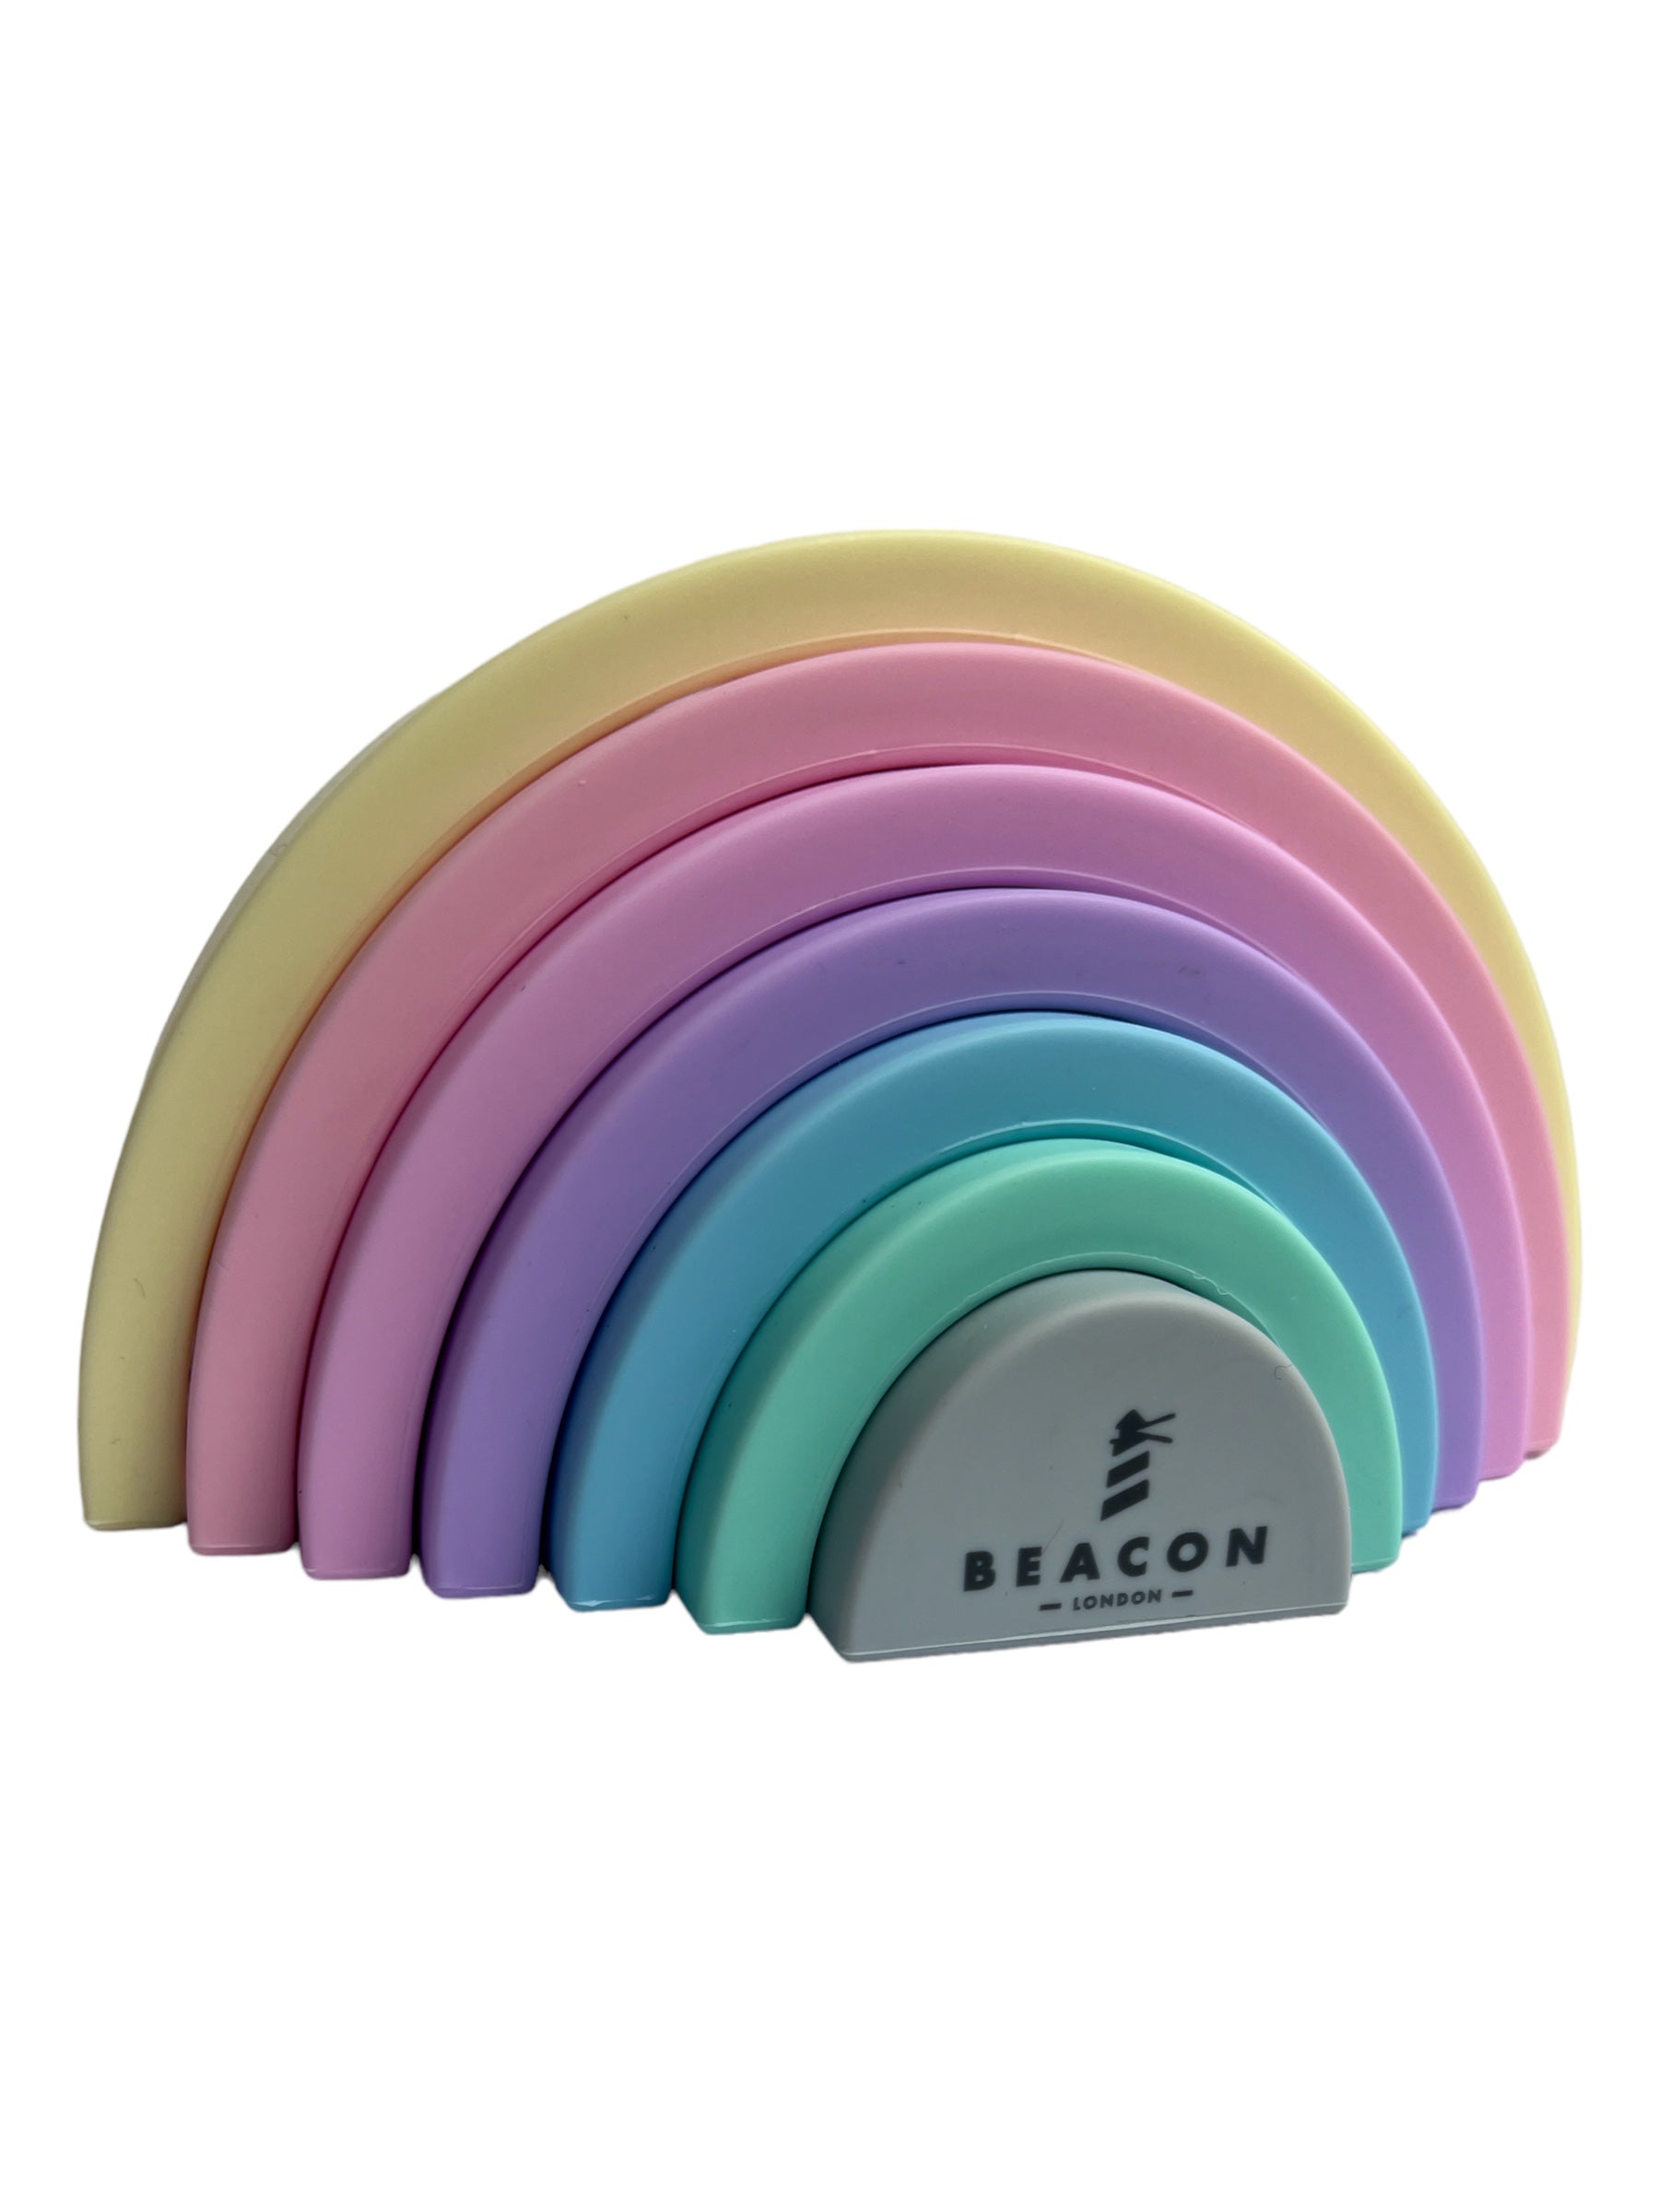 Silicone Stacking Rainbow - Pastels-Silicone Toys-Beacon London-Pastels-Beacon London